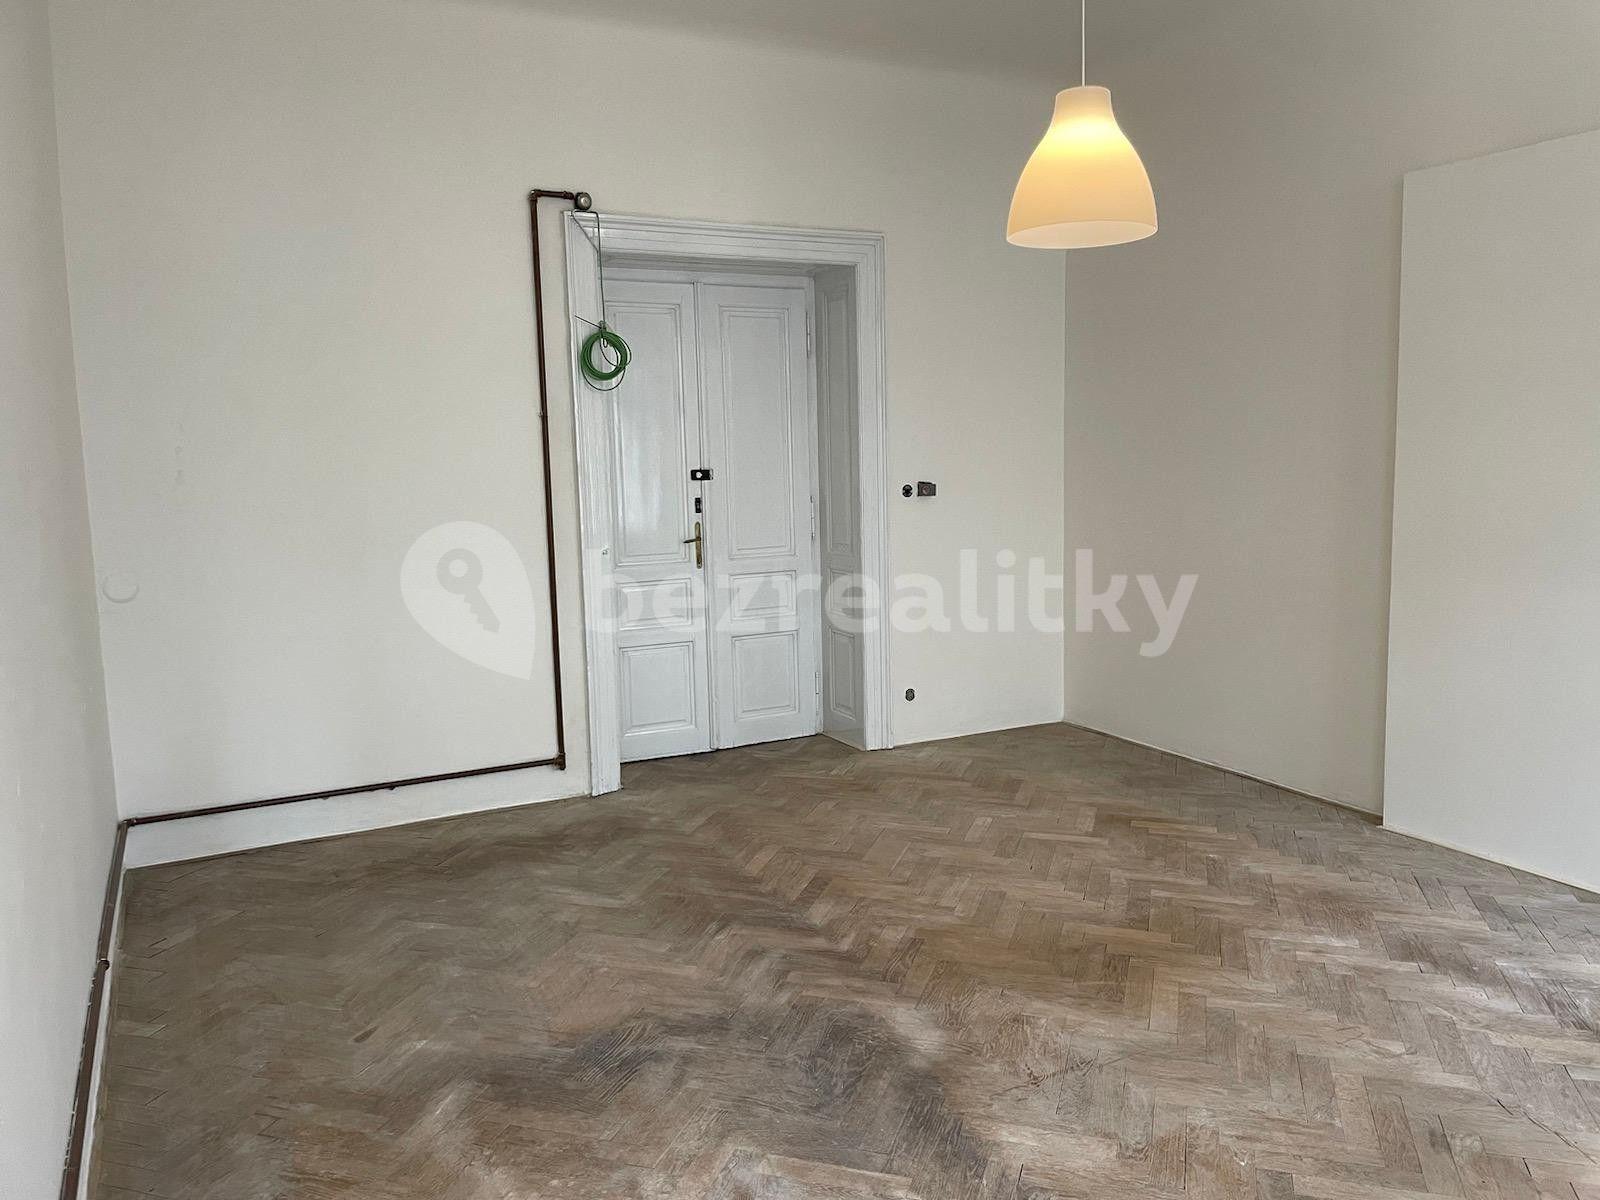 1 bedroom with open-plan kitchen flat to rent, 50 m², Jindřišská, Prague, Prague